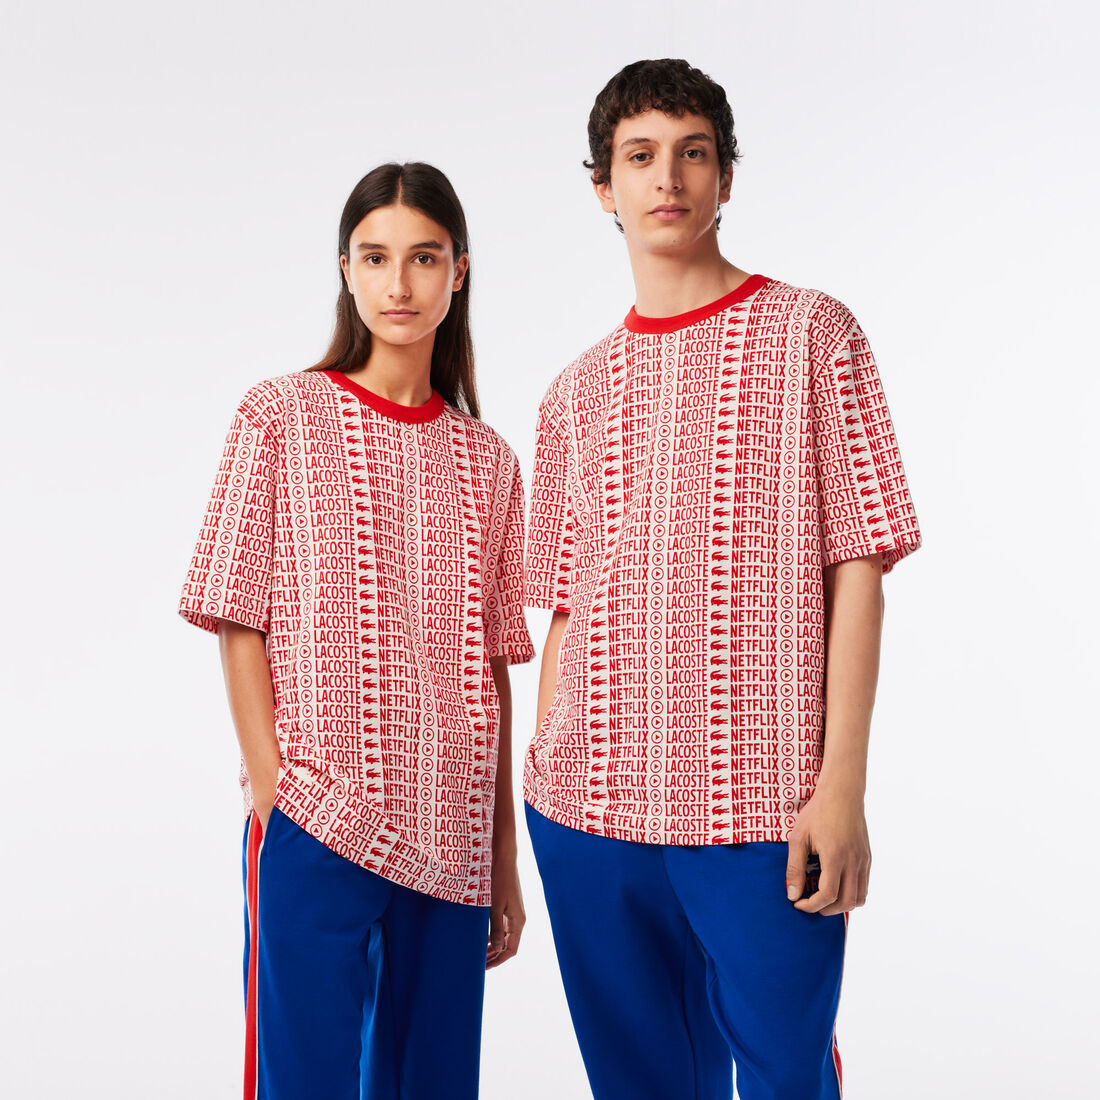 Lacoste X Netflix Loose Fit Printed T-shirts Herren Weiß Rot | RAHT-32497